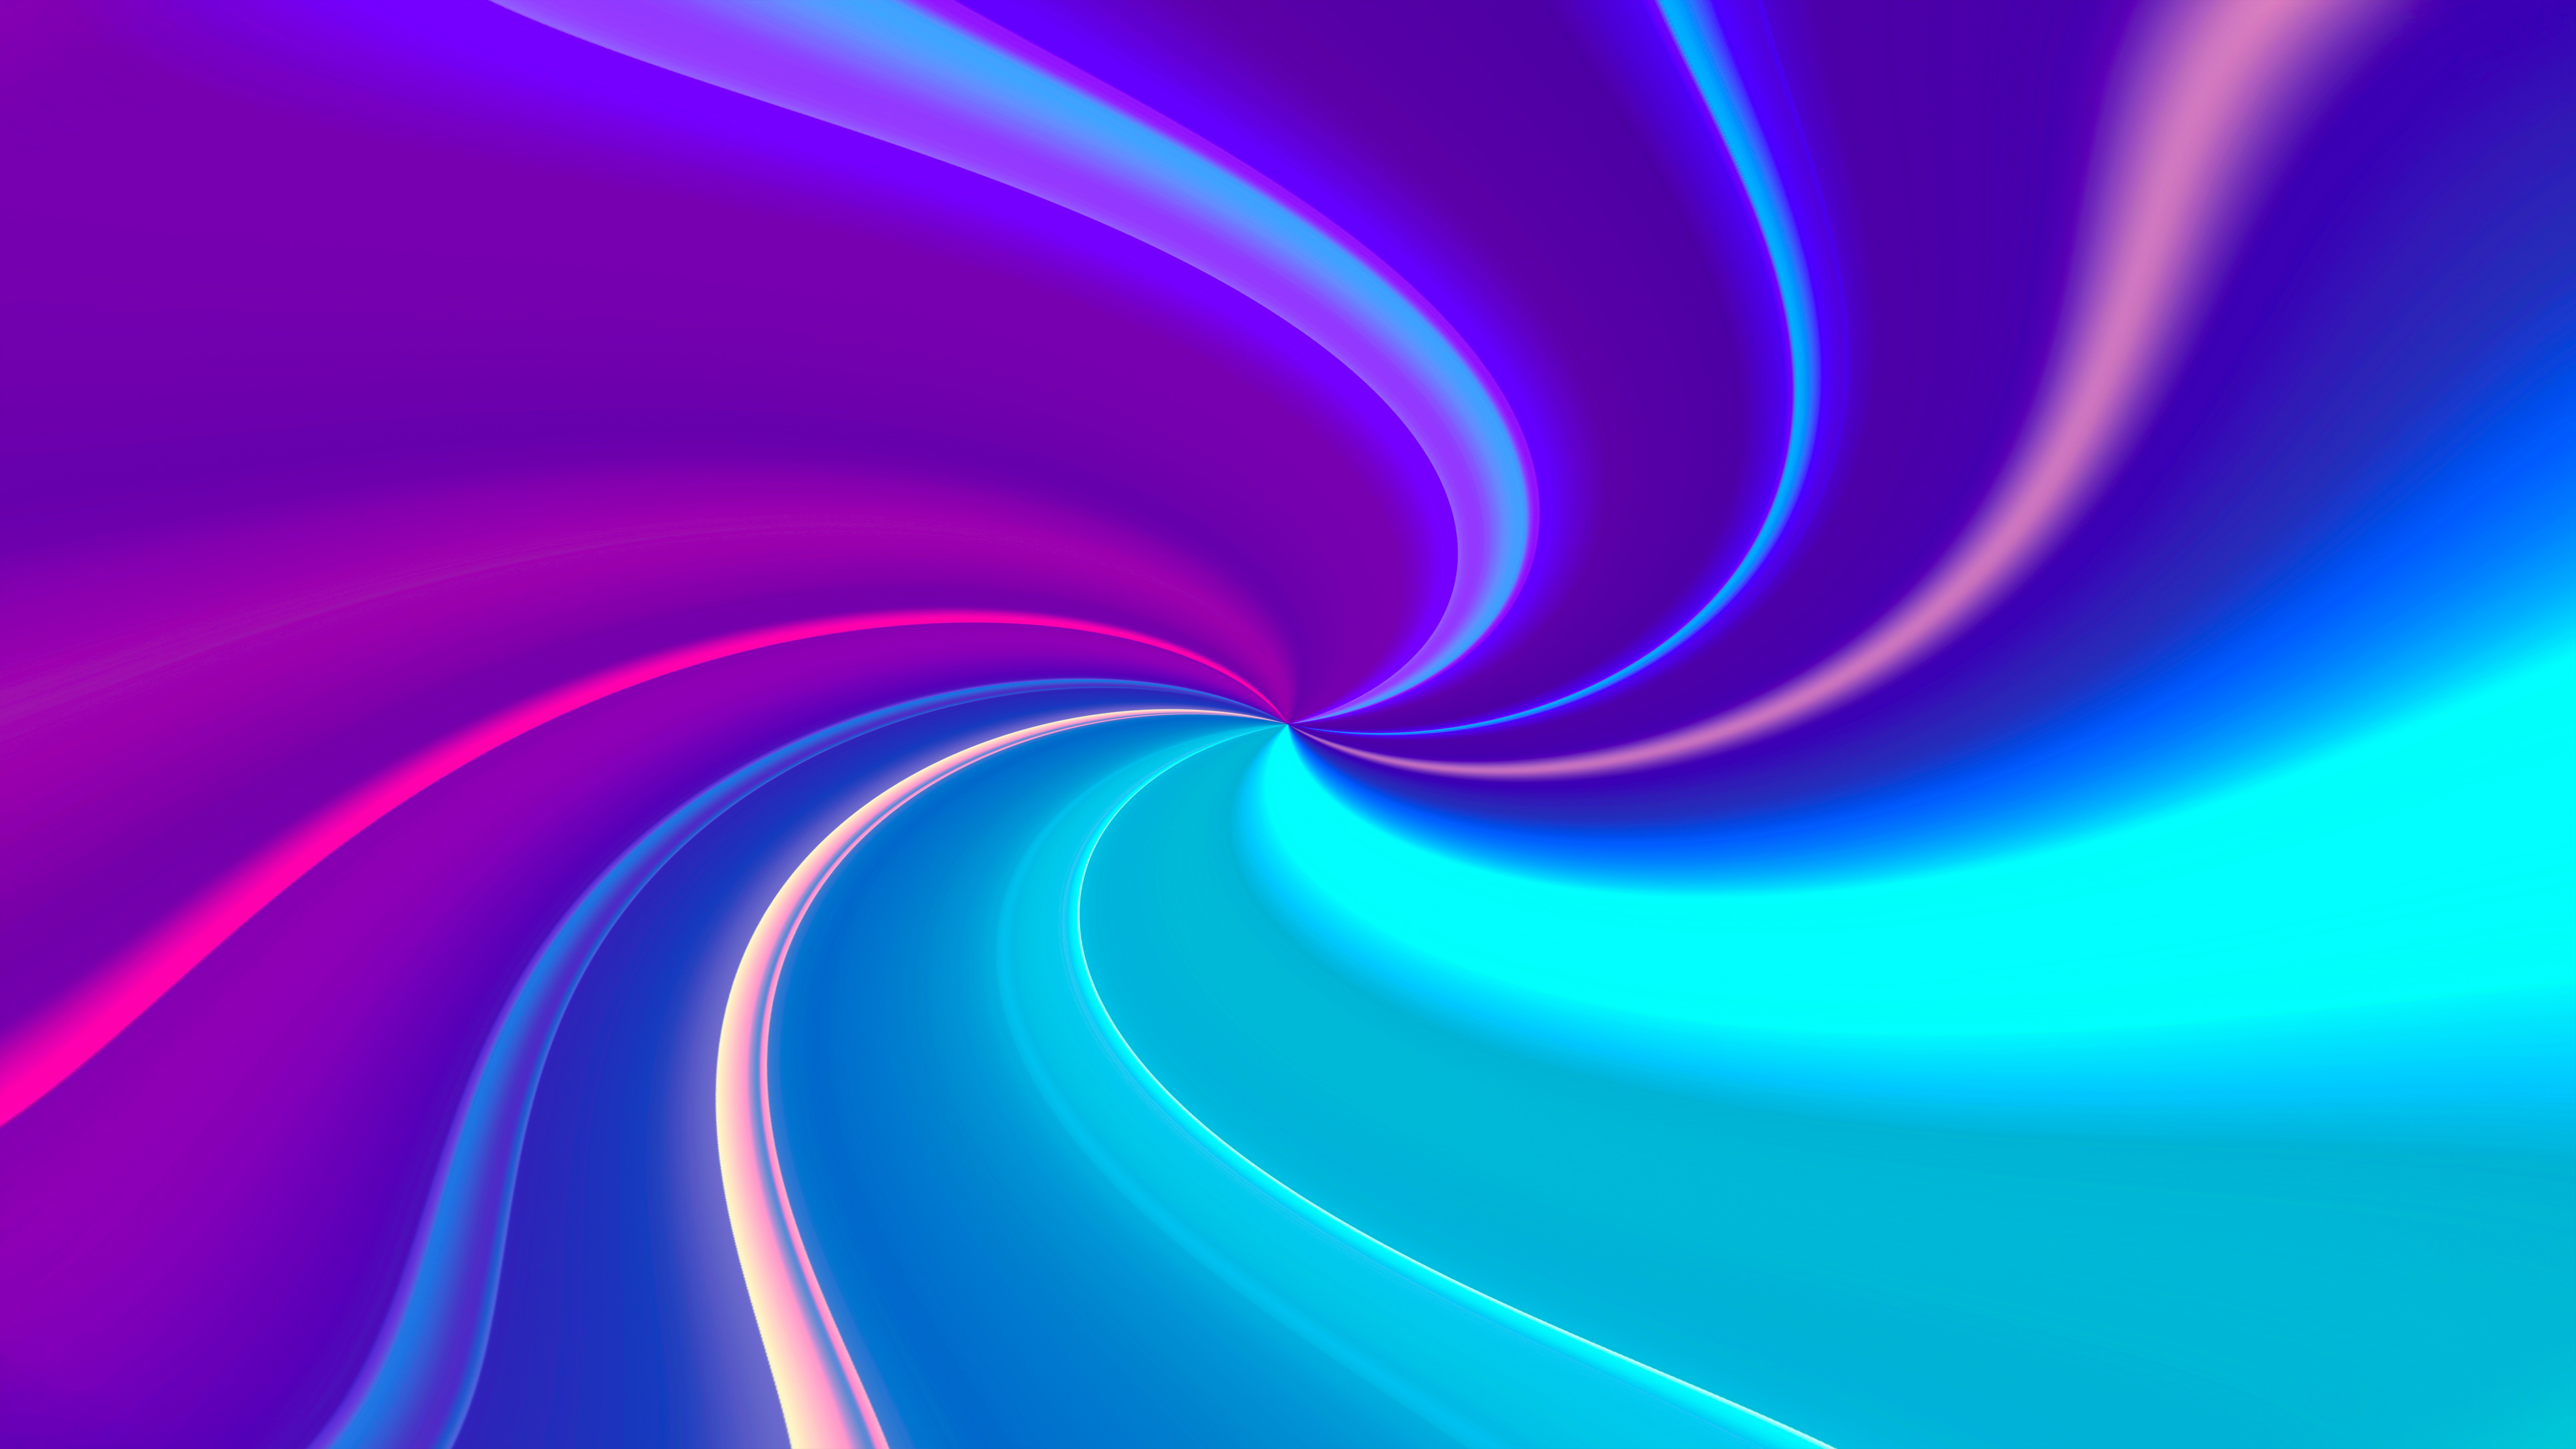 Wallpaper Neon spiral blue and purple